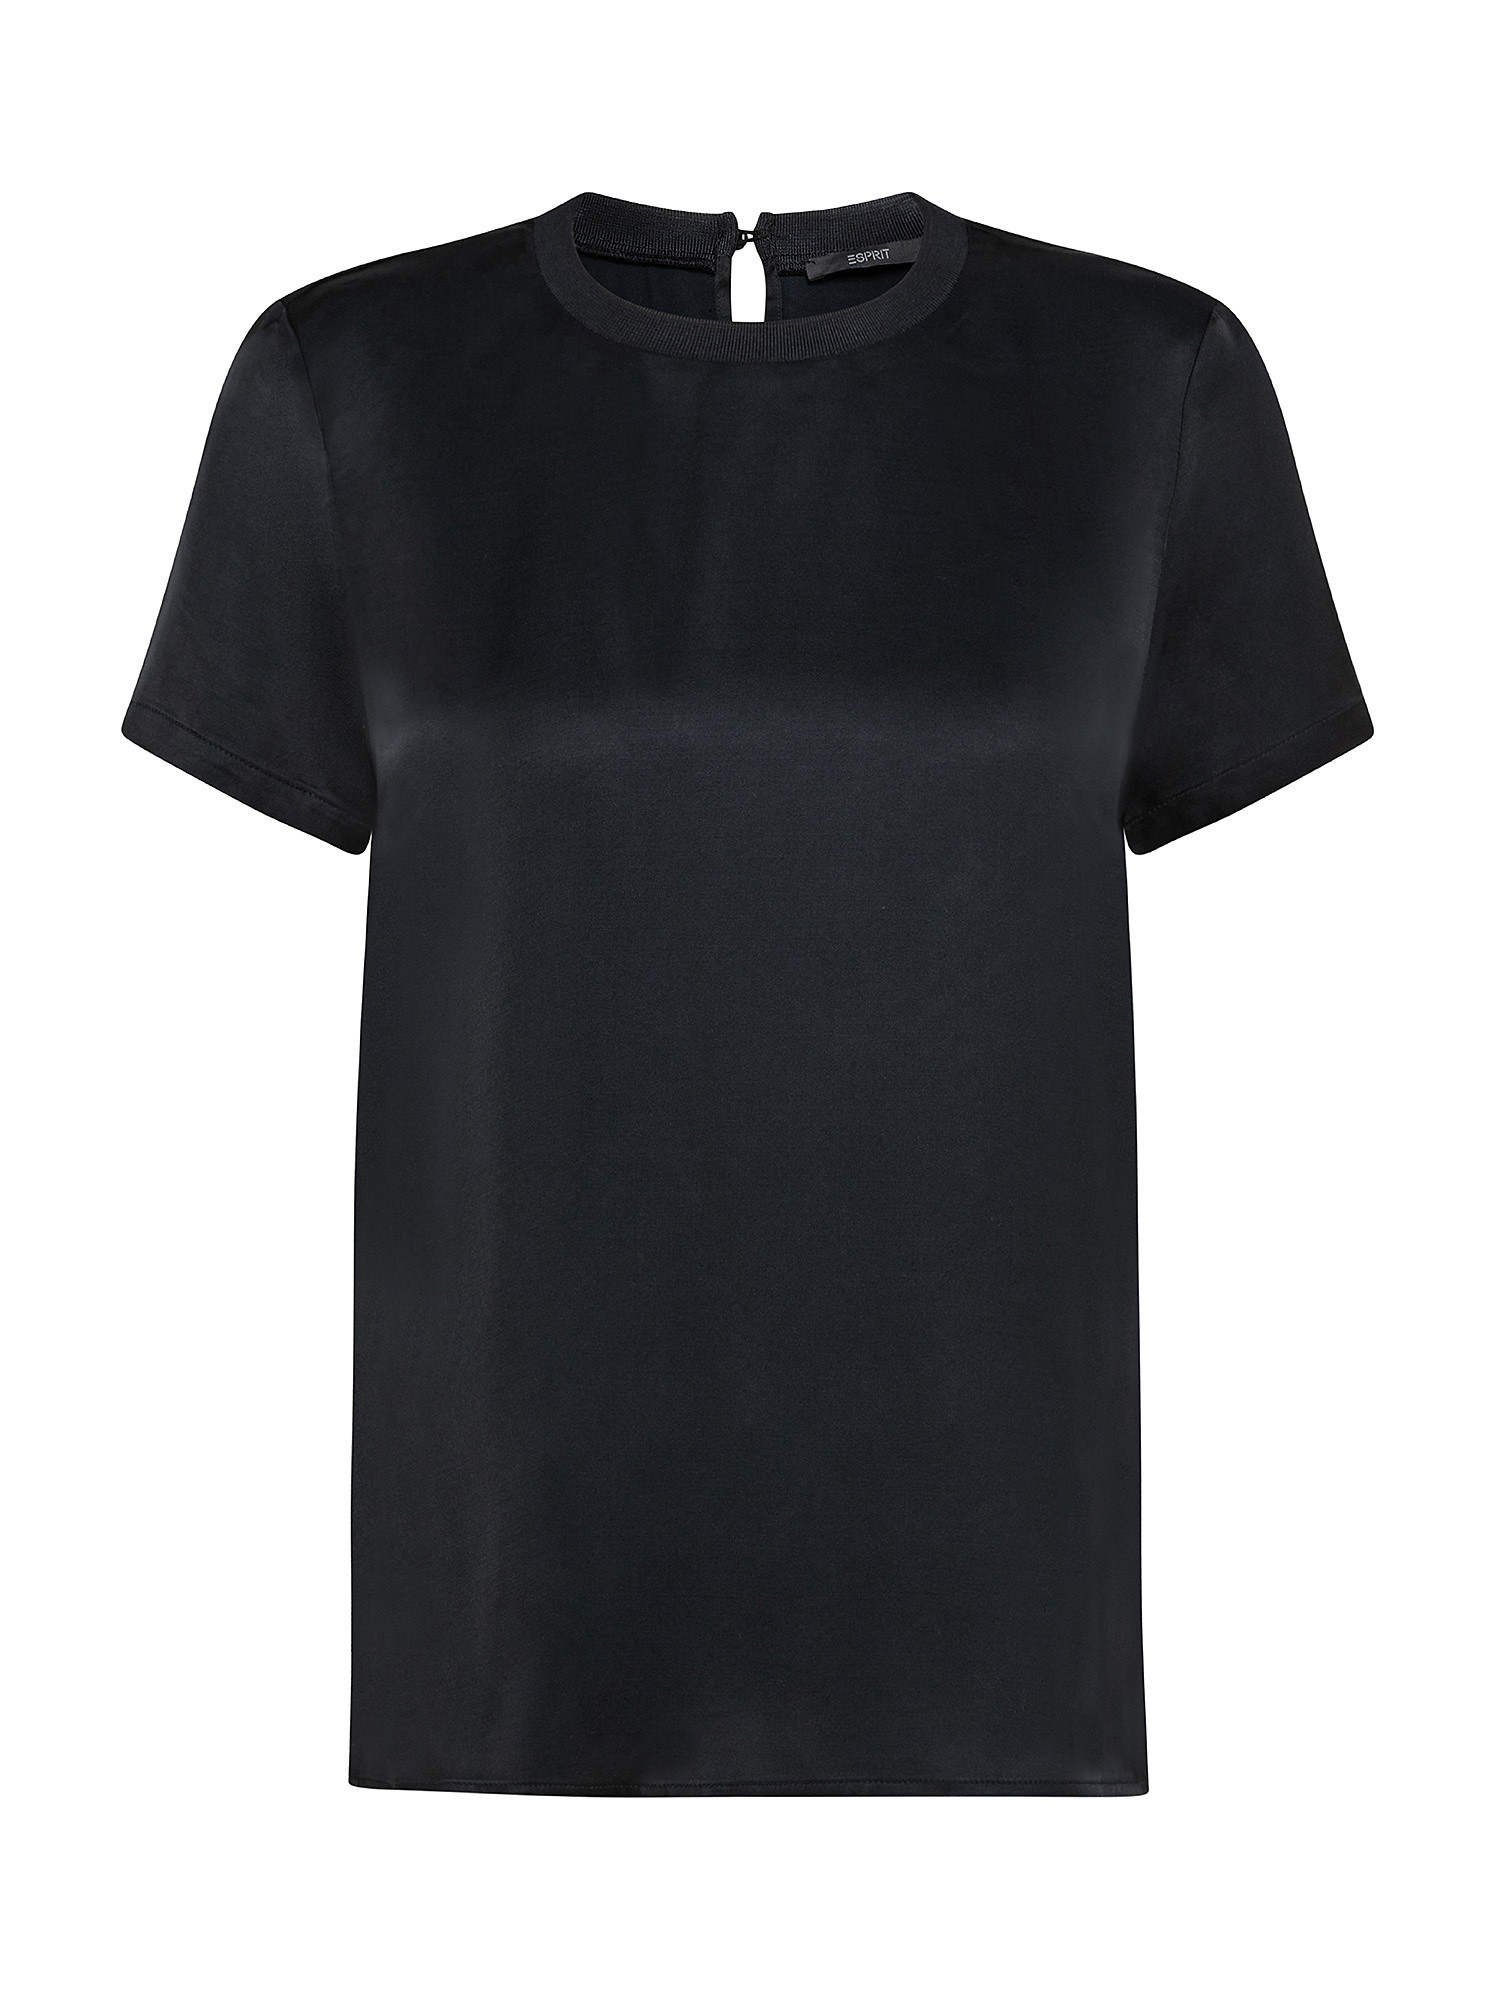 Satin blouse, Black, large image number 0